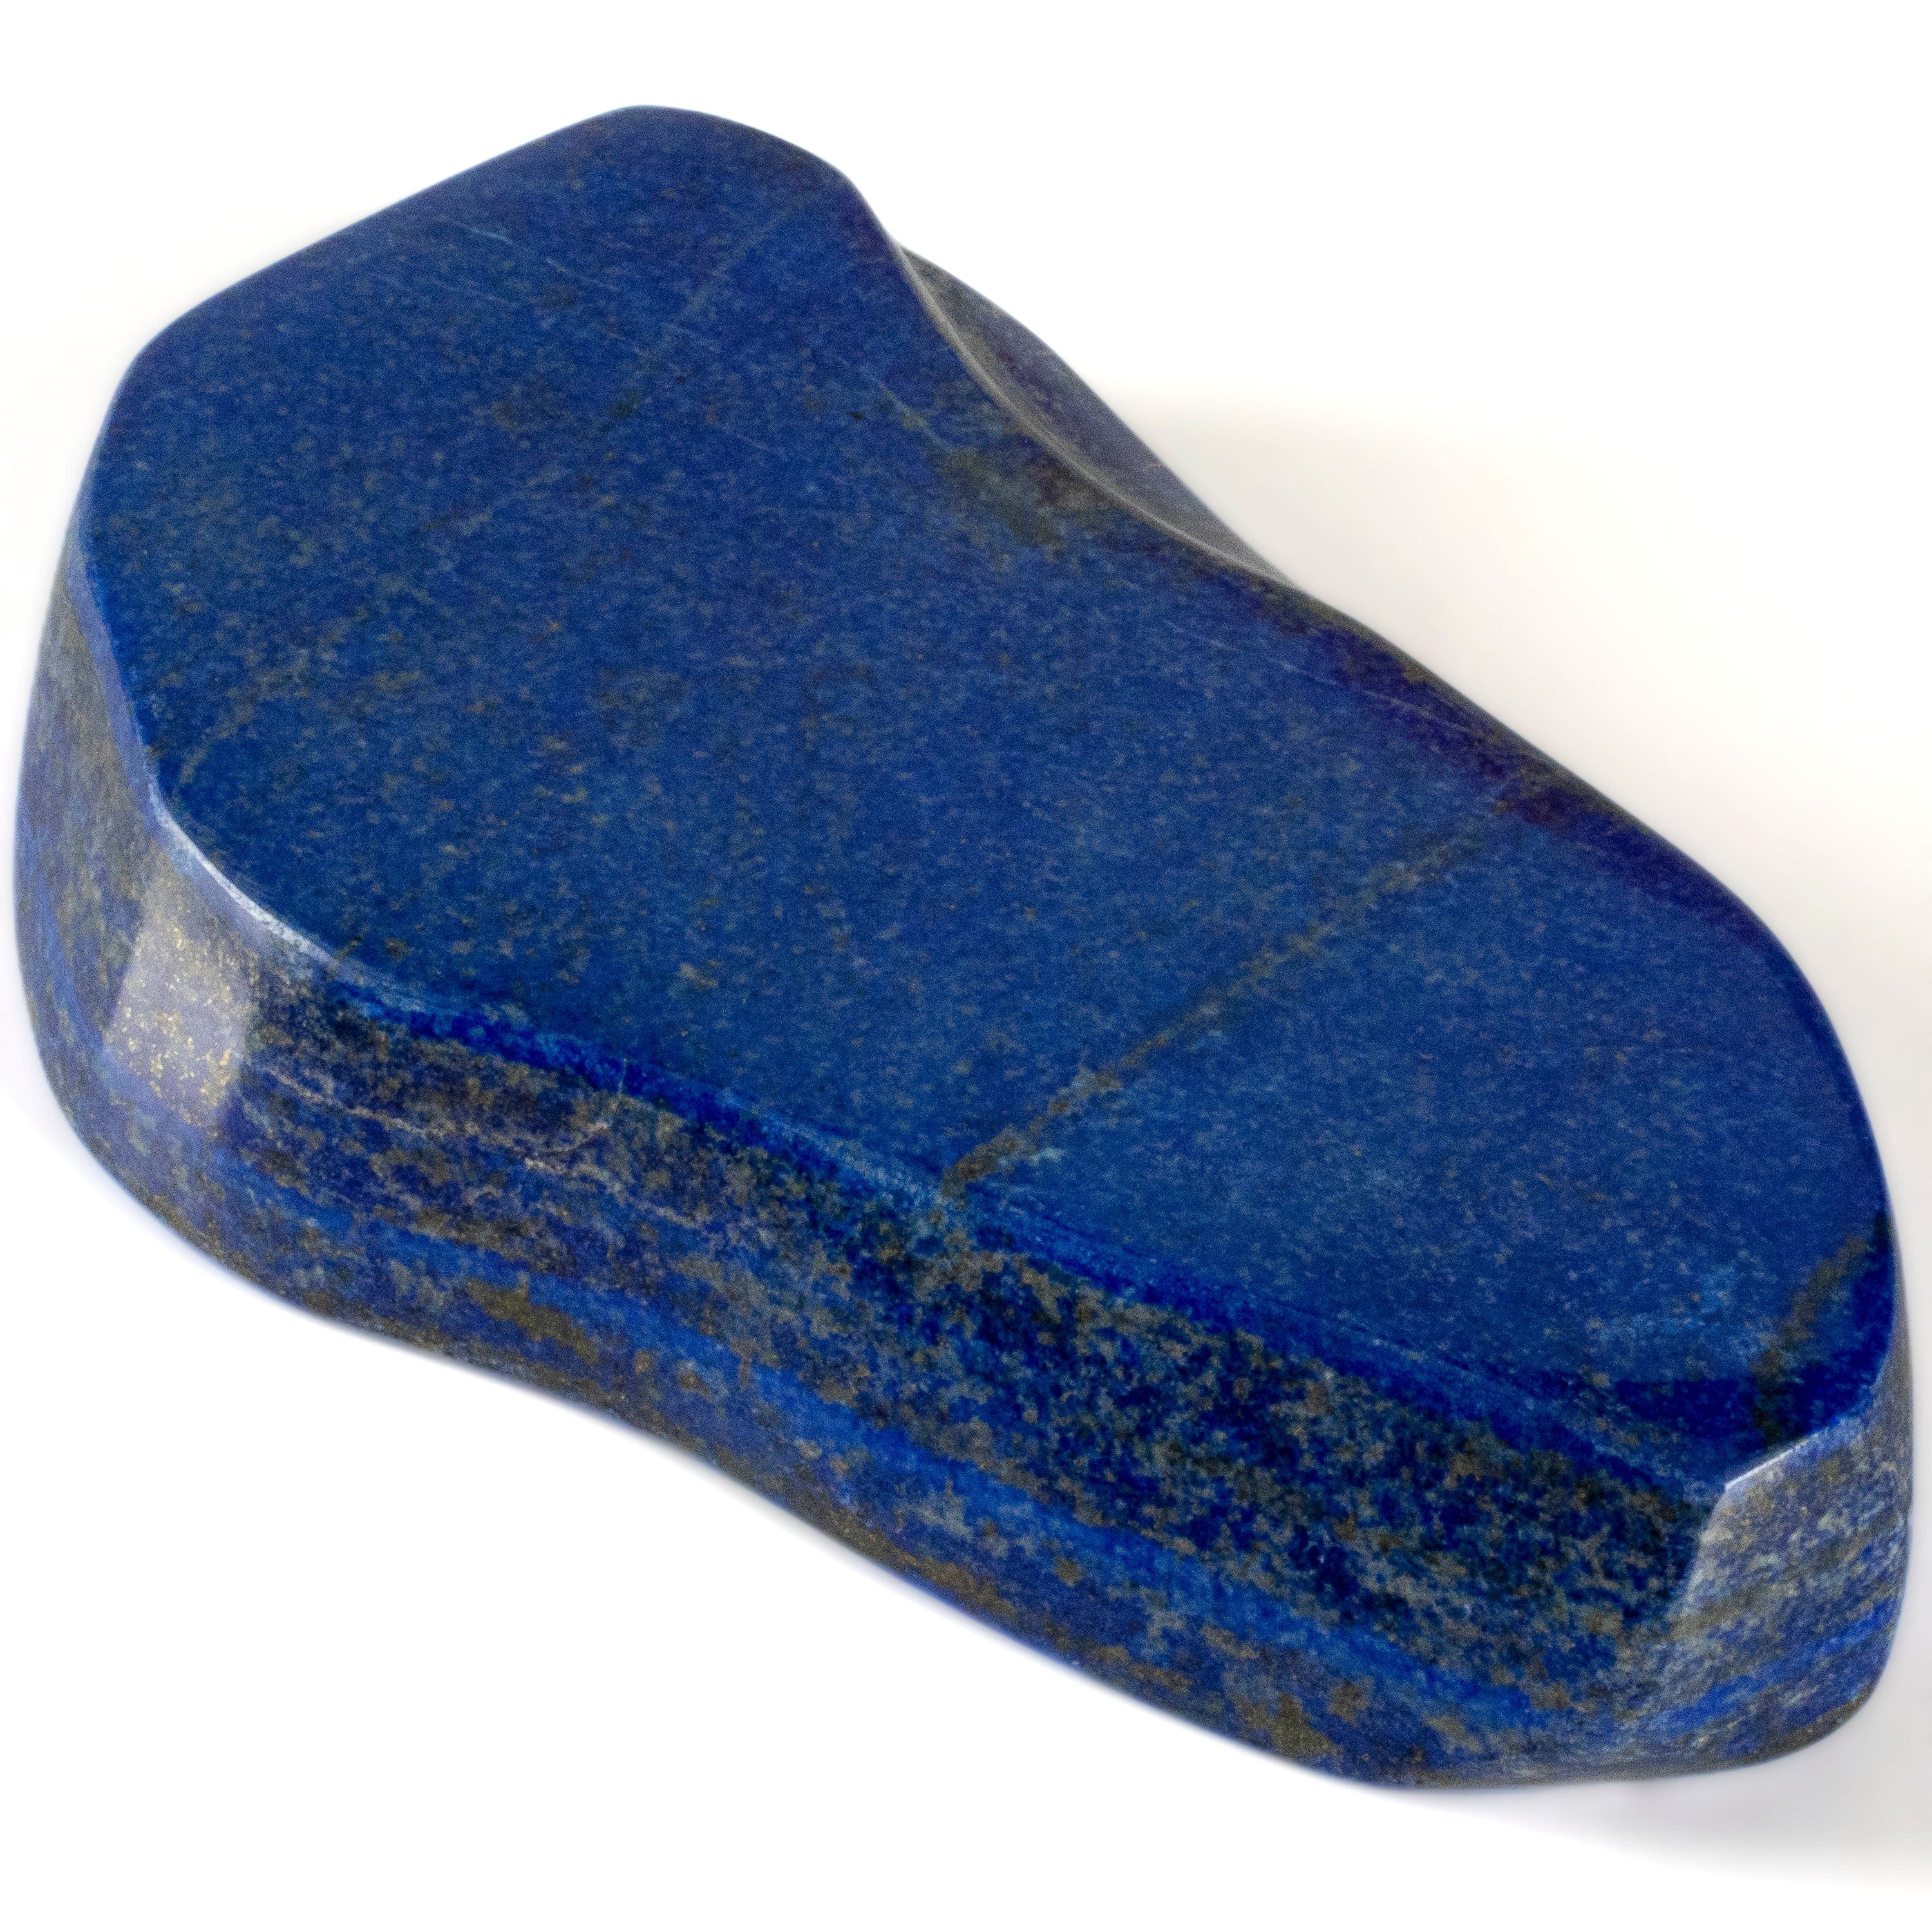 Kalifano Lapis Lapis Lazuli Freeform from Afghanistan - 8" / 1,690 grams LP1700.003